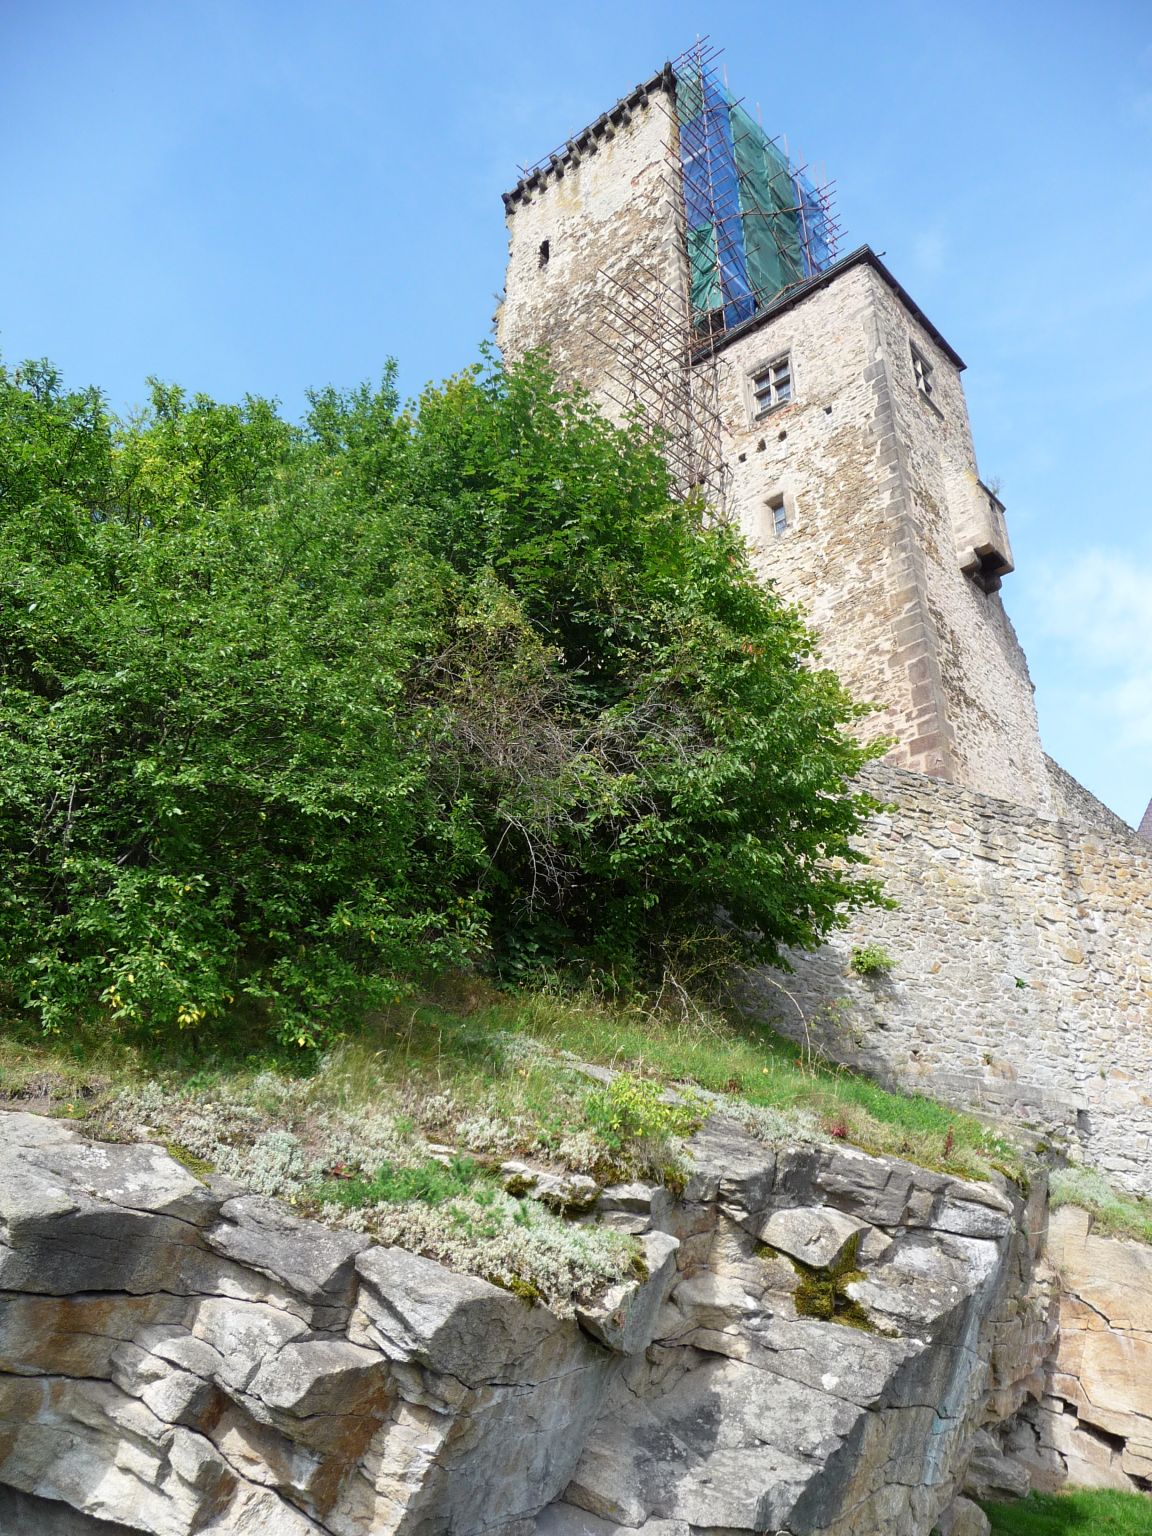 Hrad Lipnice restauratie toren